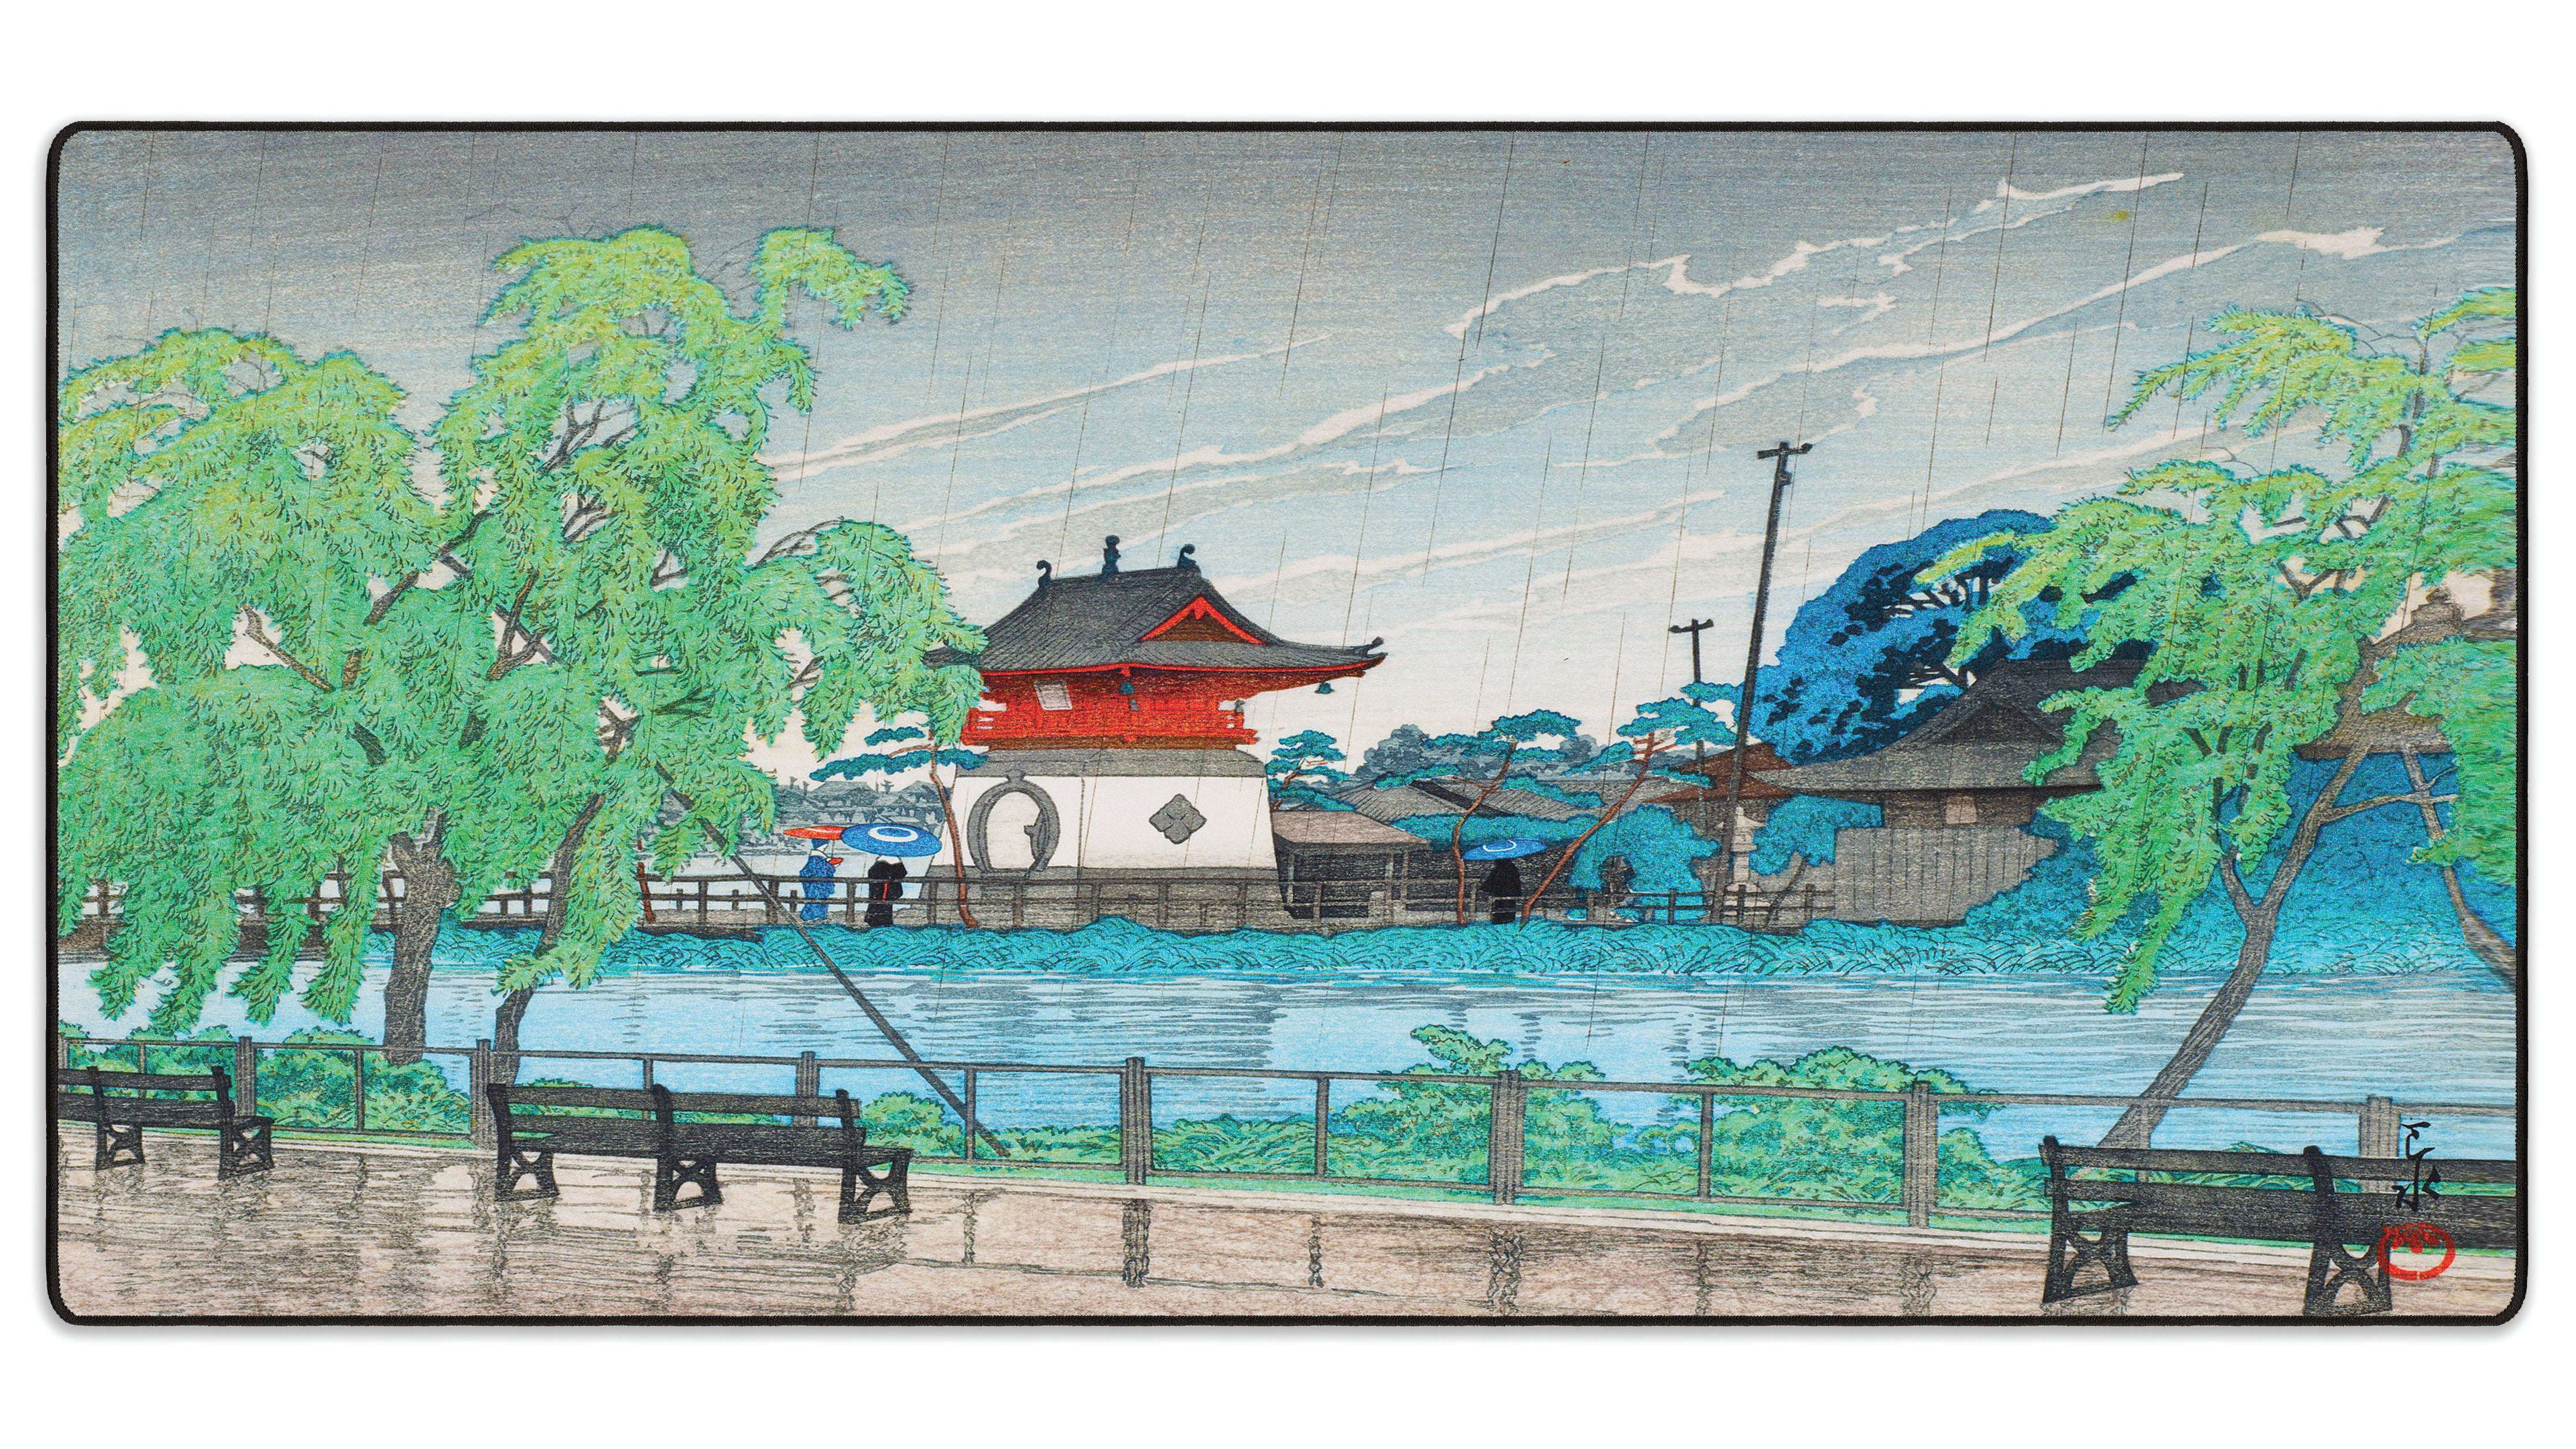 Rain at Shinobazu Pond, by Hasui - The Mousepad Company